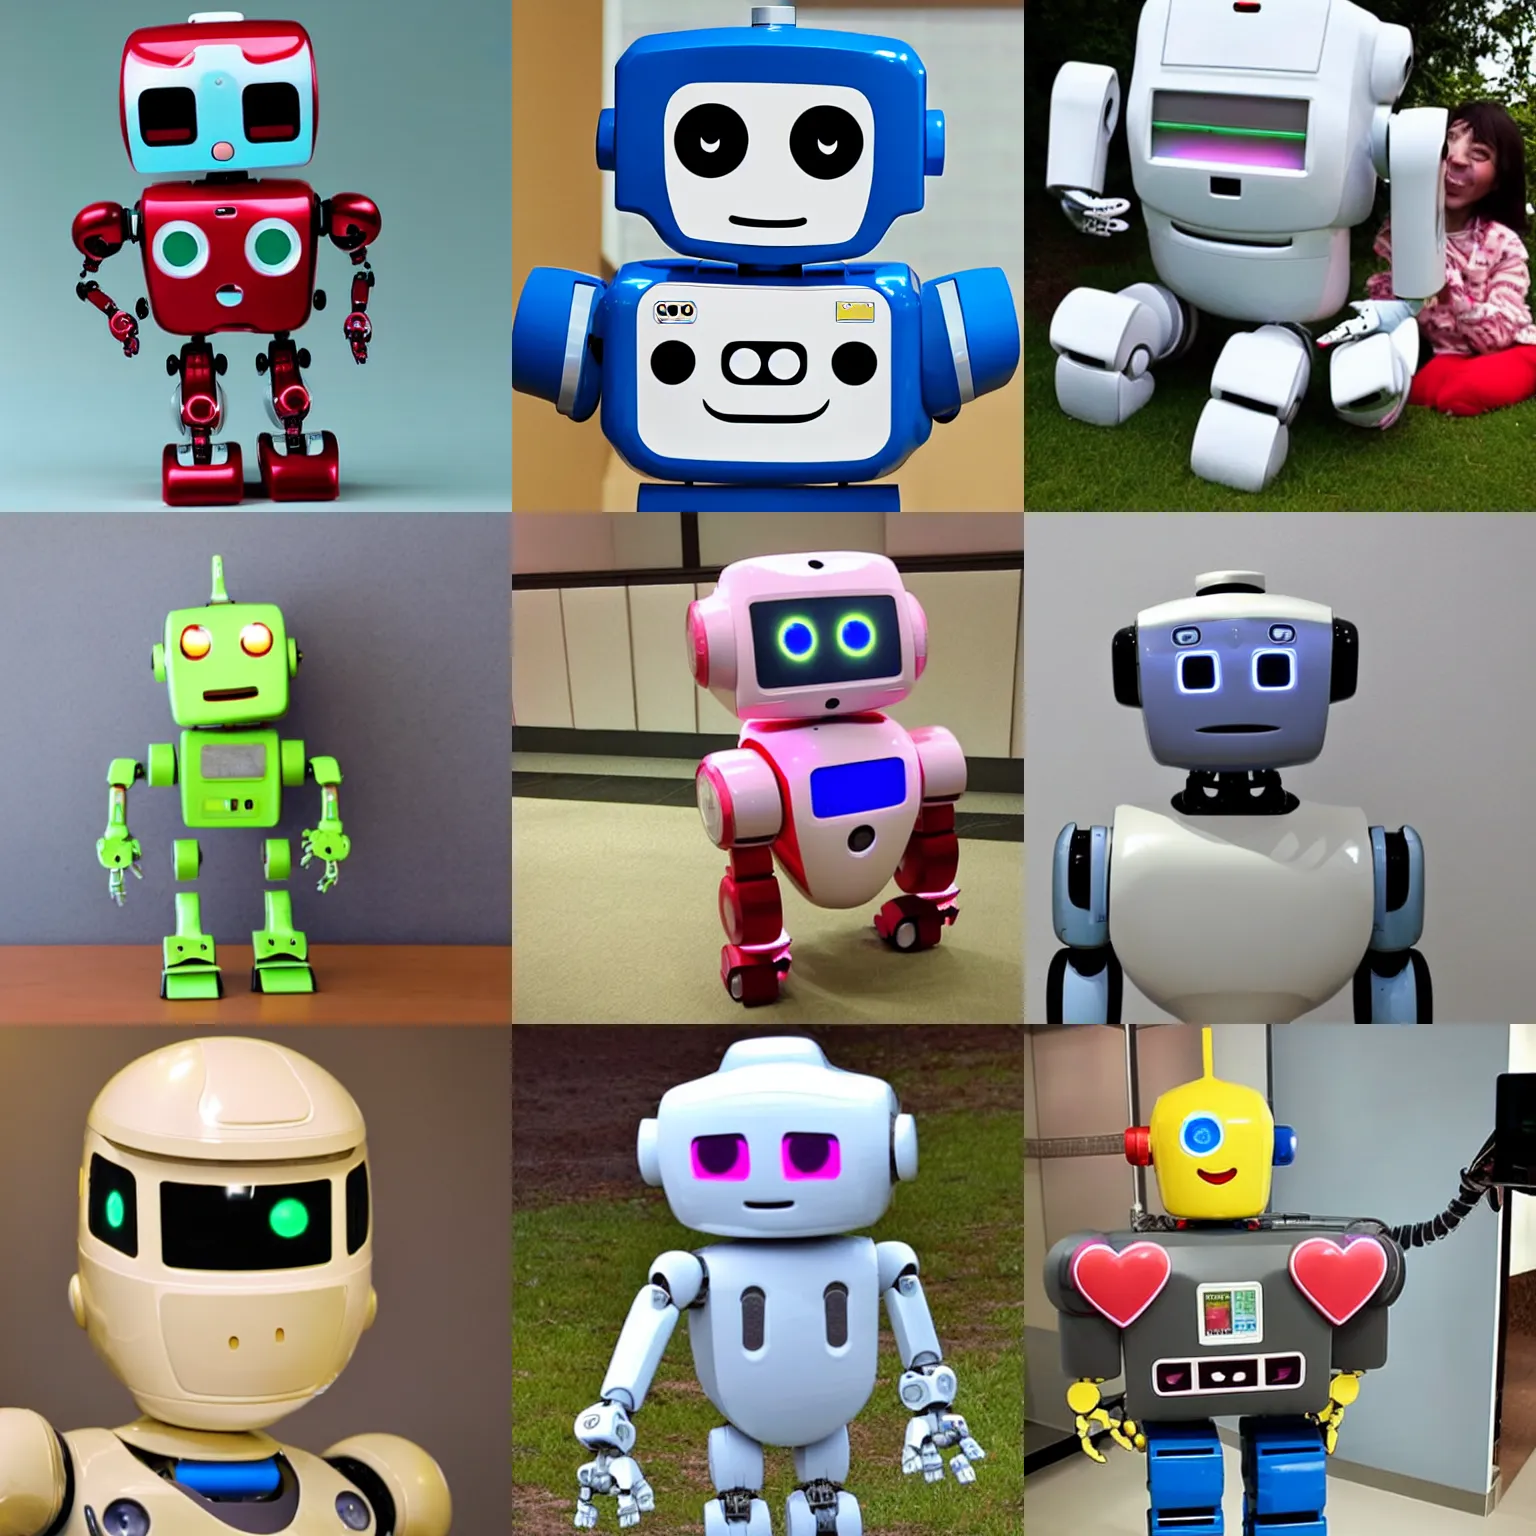 Prompt: <photo attention-grabbing robot-traits='friendly happy wellbuilt' robot-desires='hug'>Cute Robot has urgent message for you</photo>